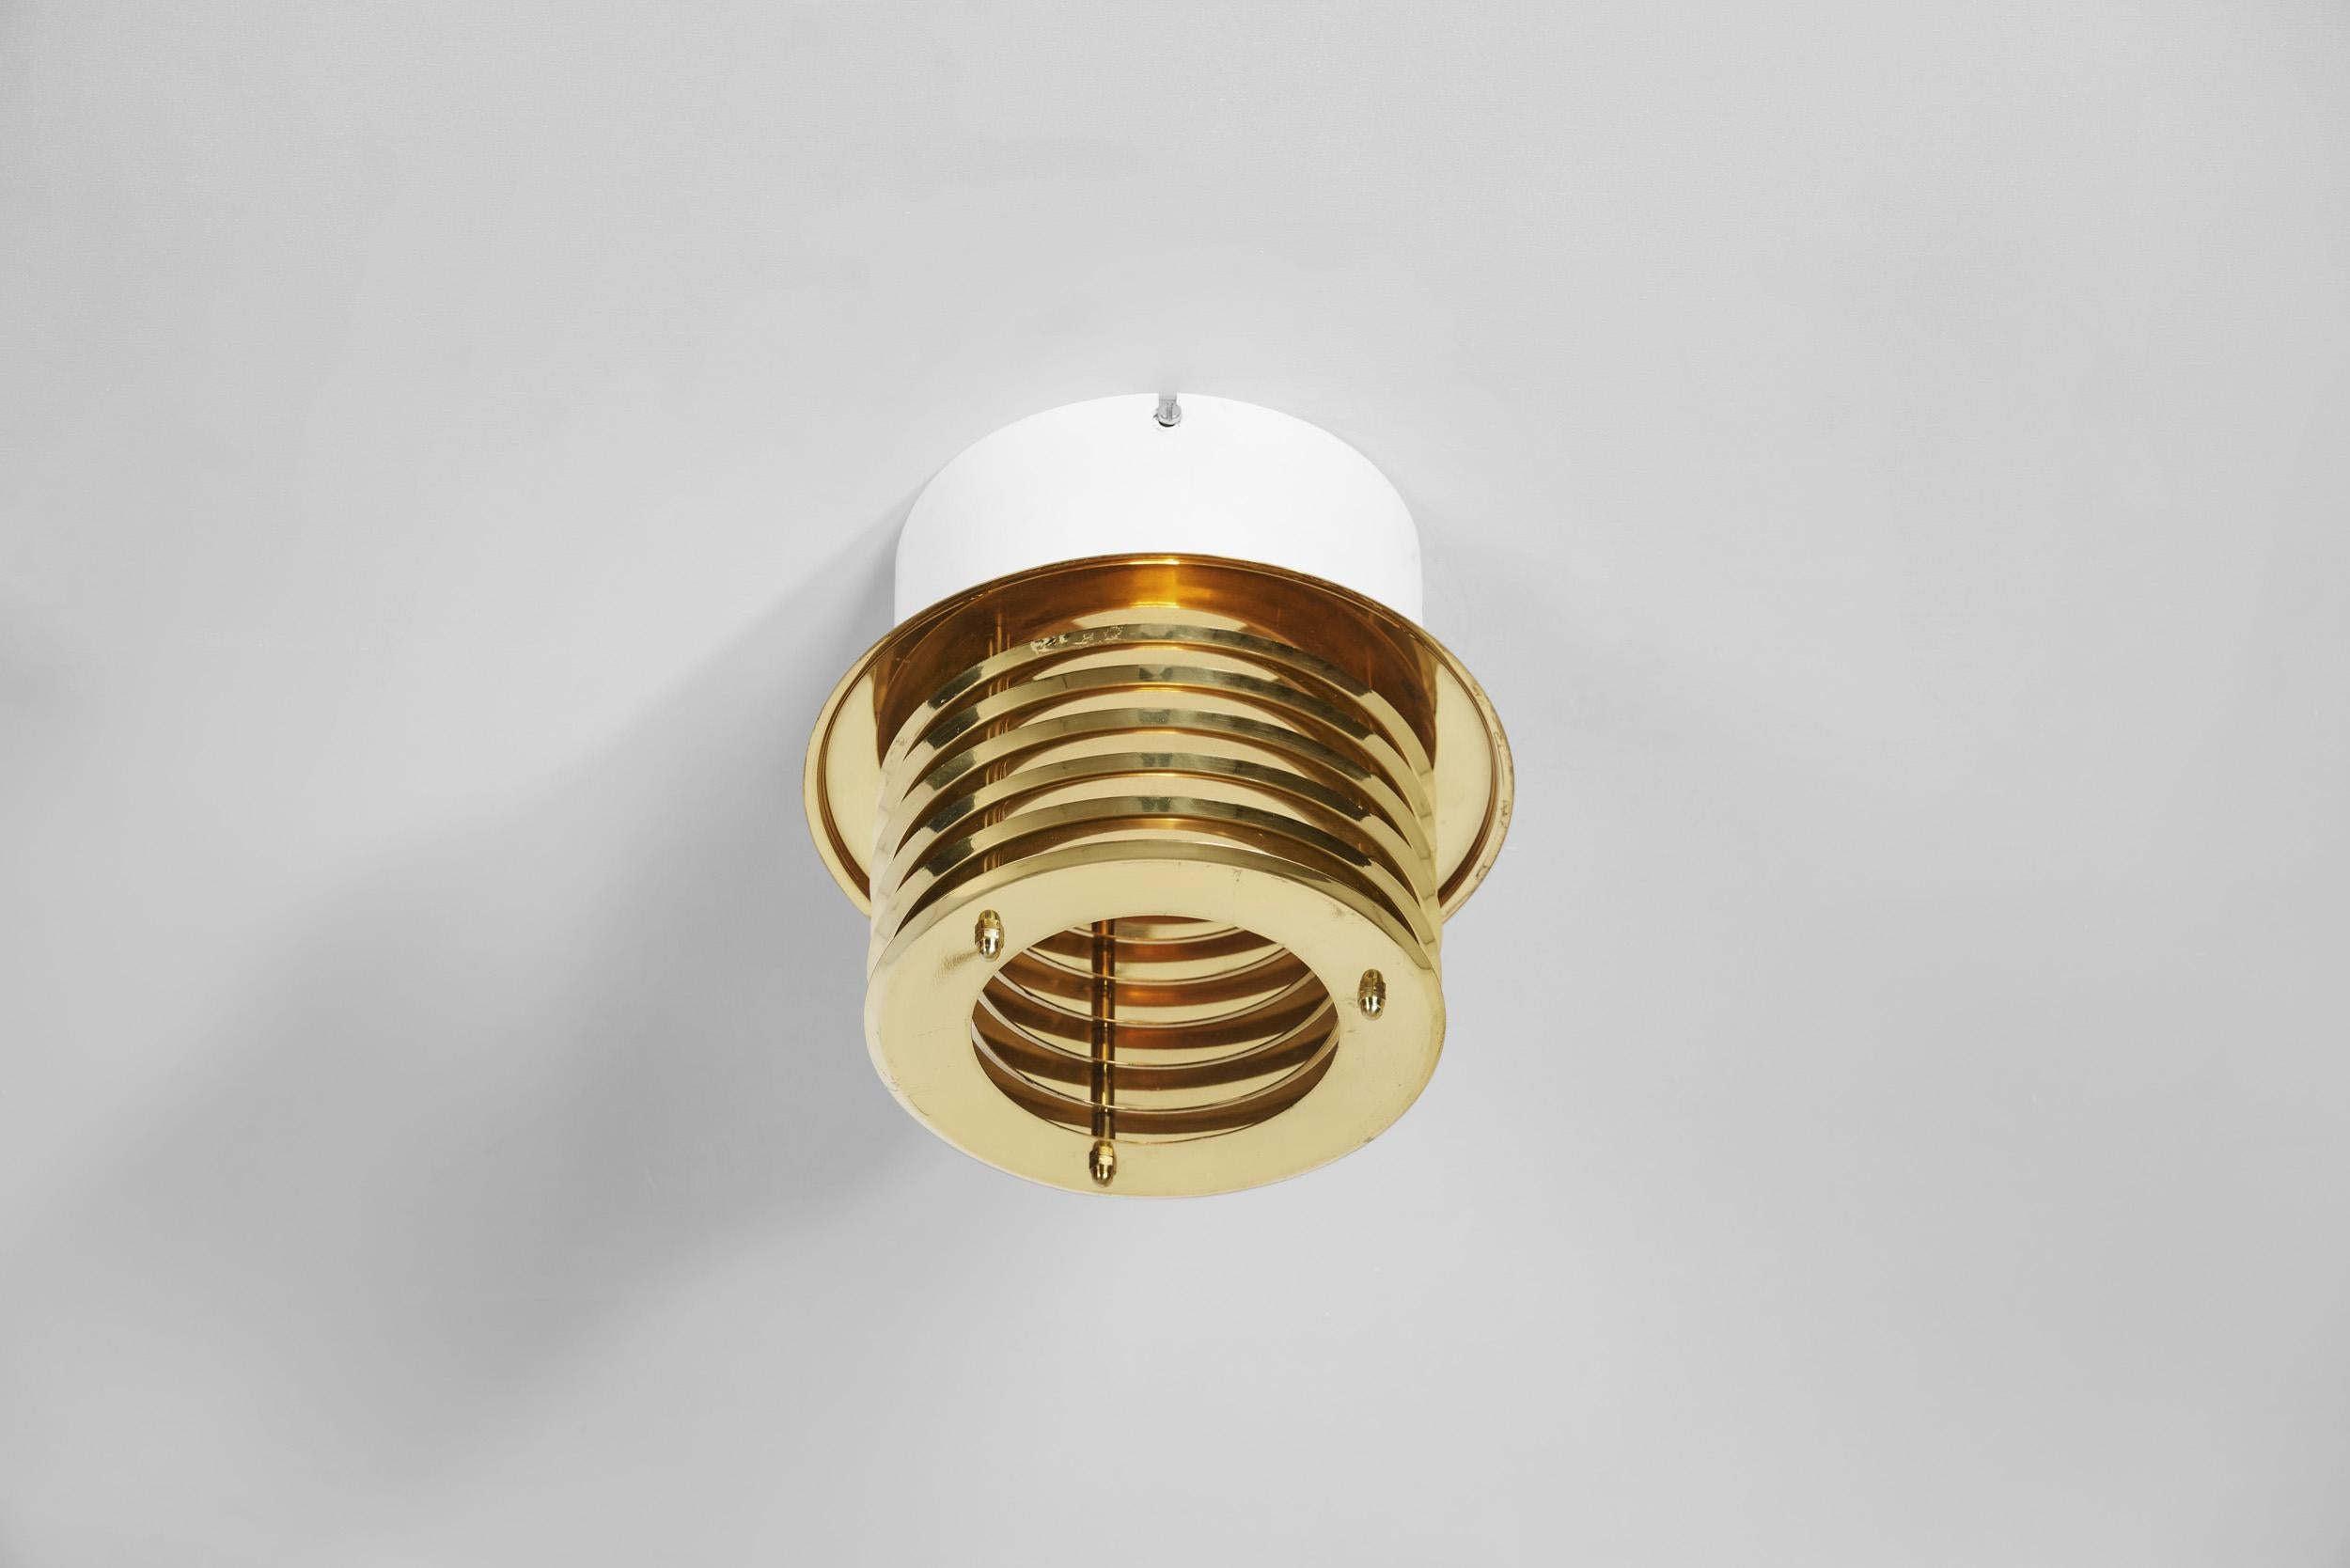 Sheet Metal Brass and Metal Ceiling Lamps by Taiba-Falkenberg Belysnin, Sweden 1960s